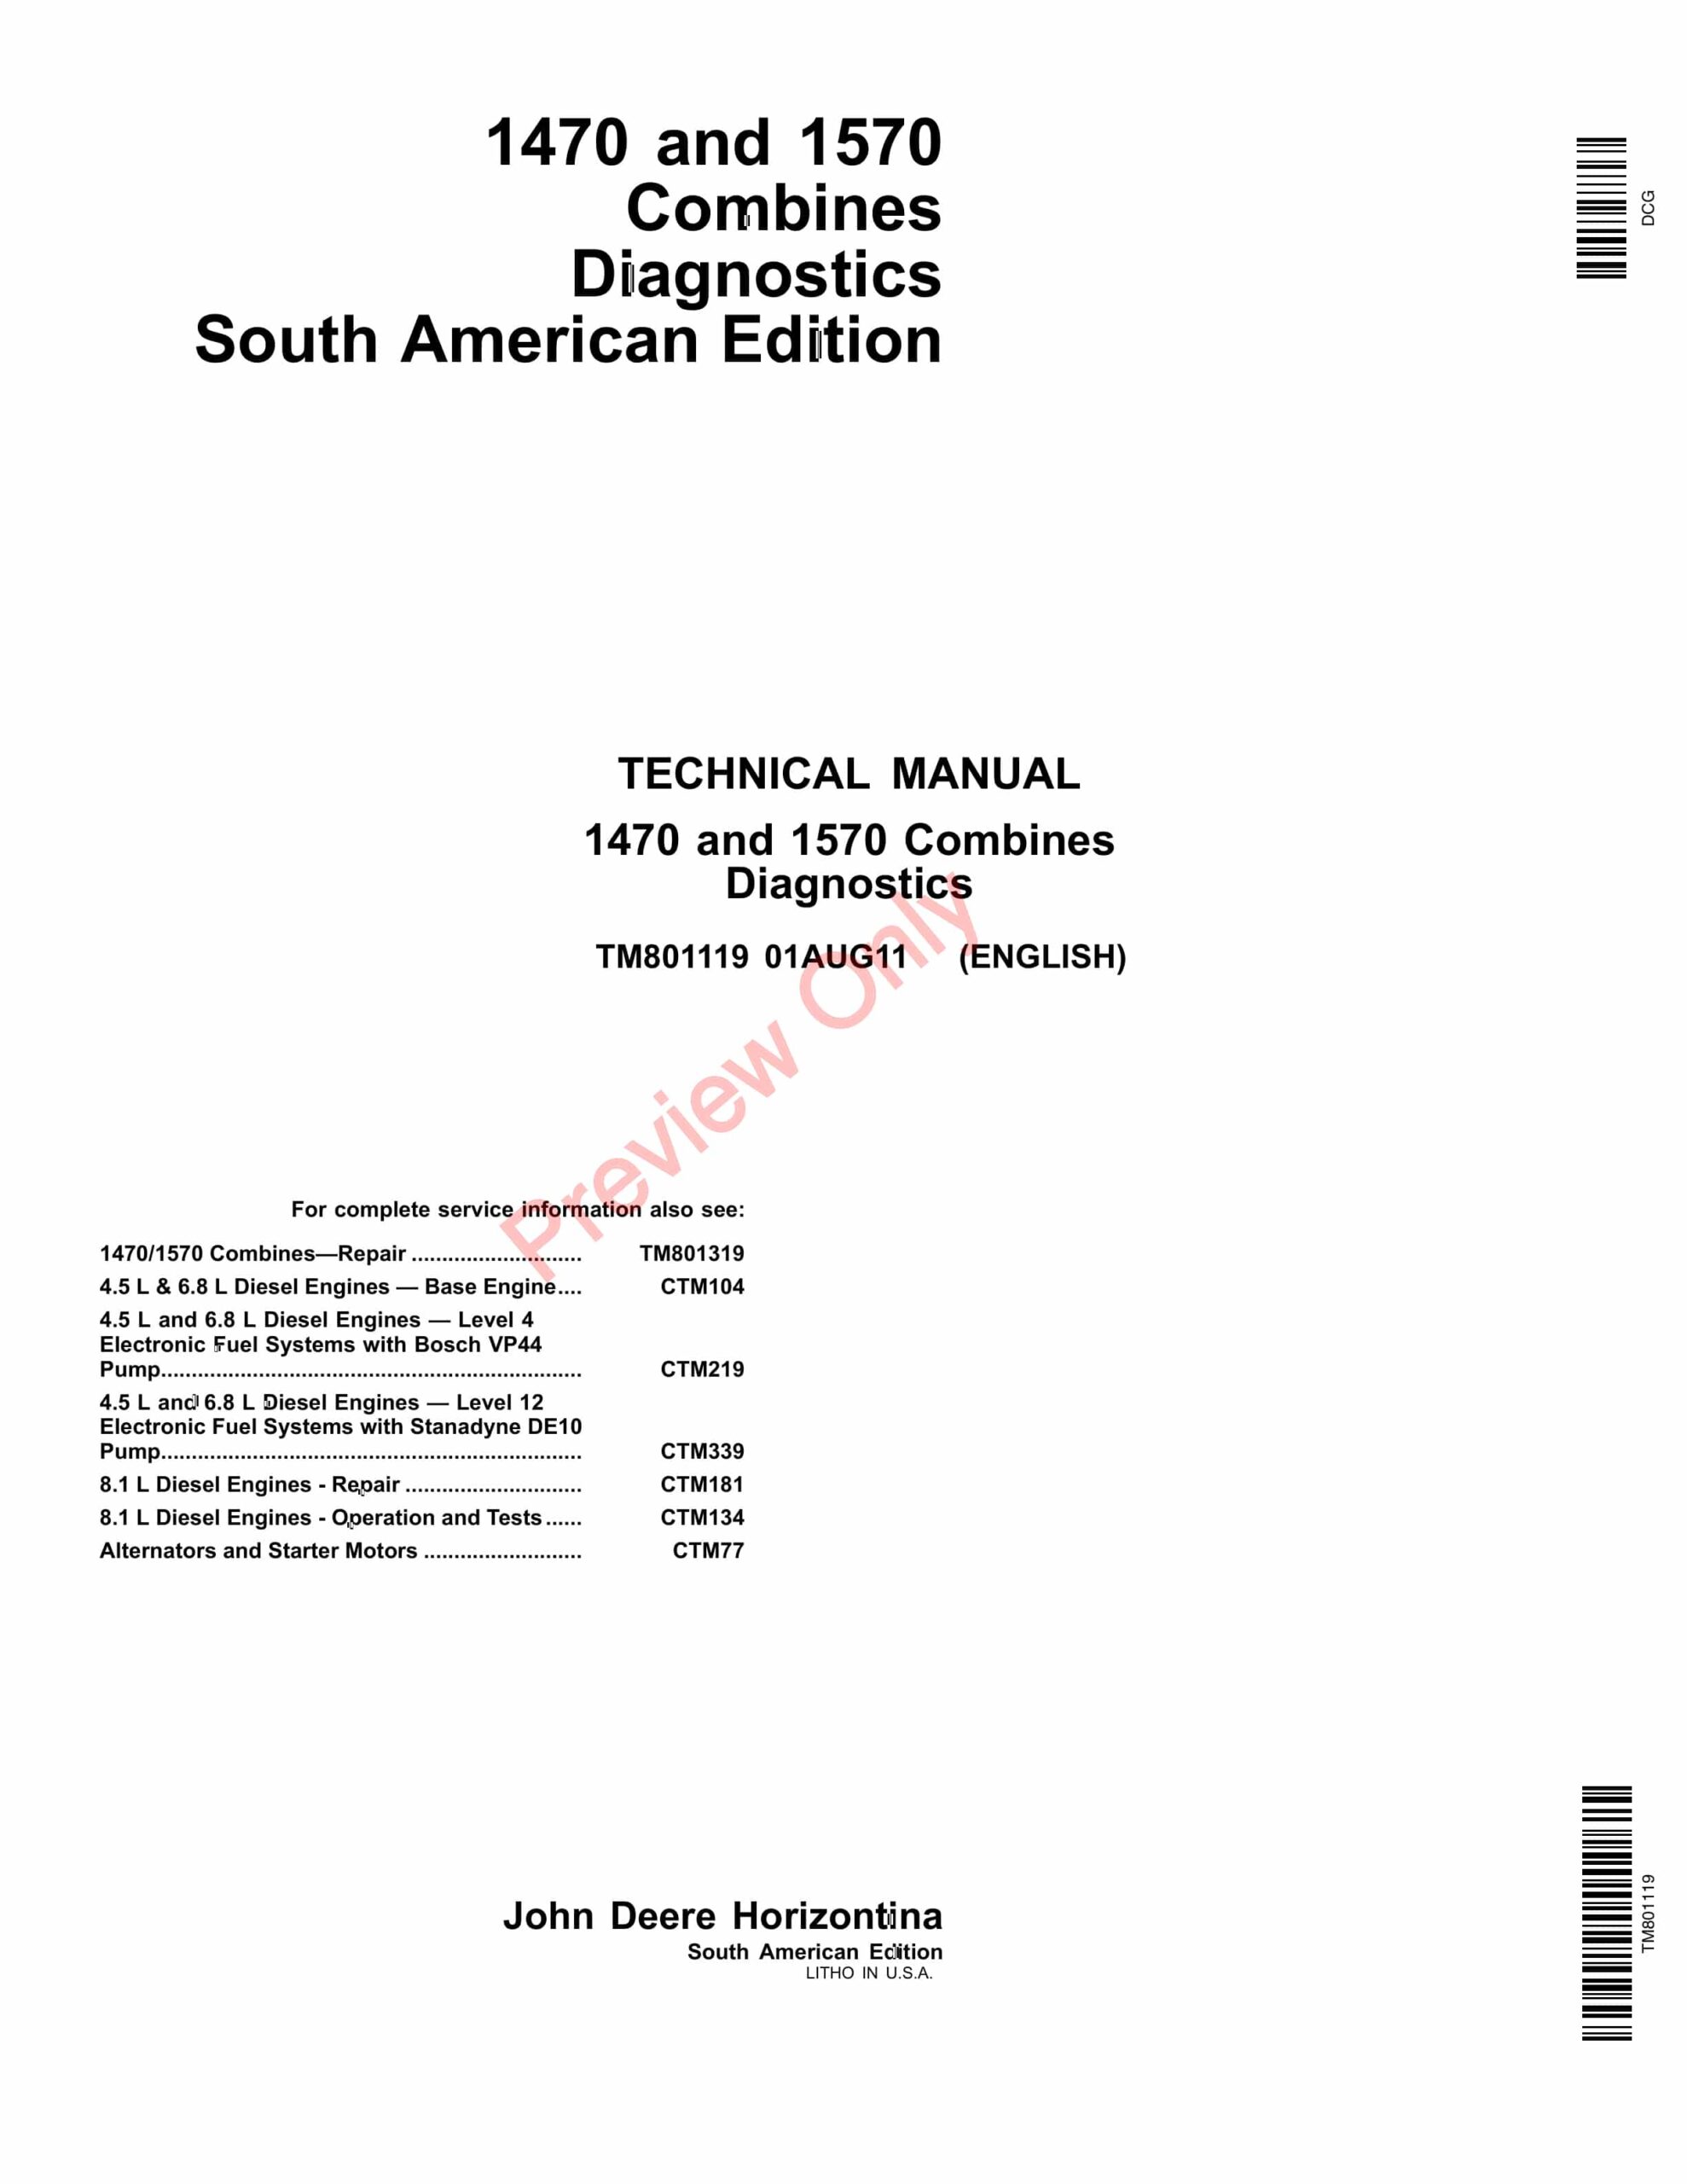 John Deere 1470, 1570 Combine Technical Manual TM801119 19APR12-1